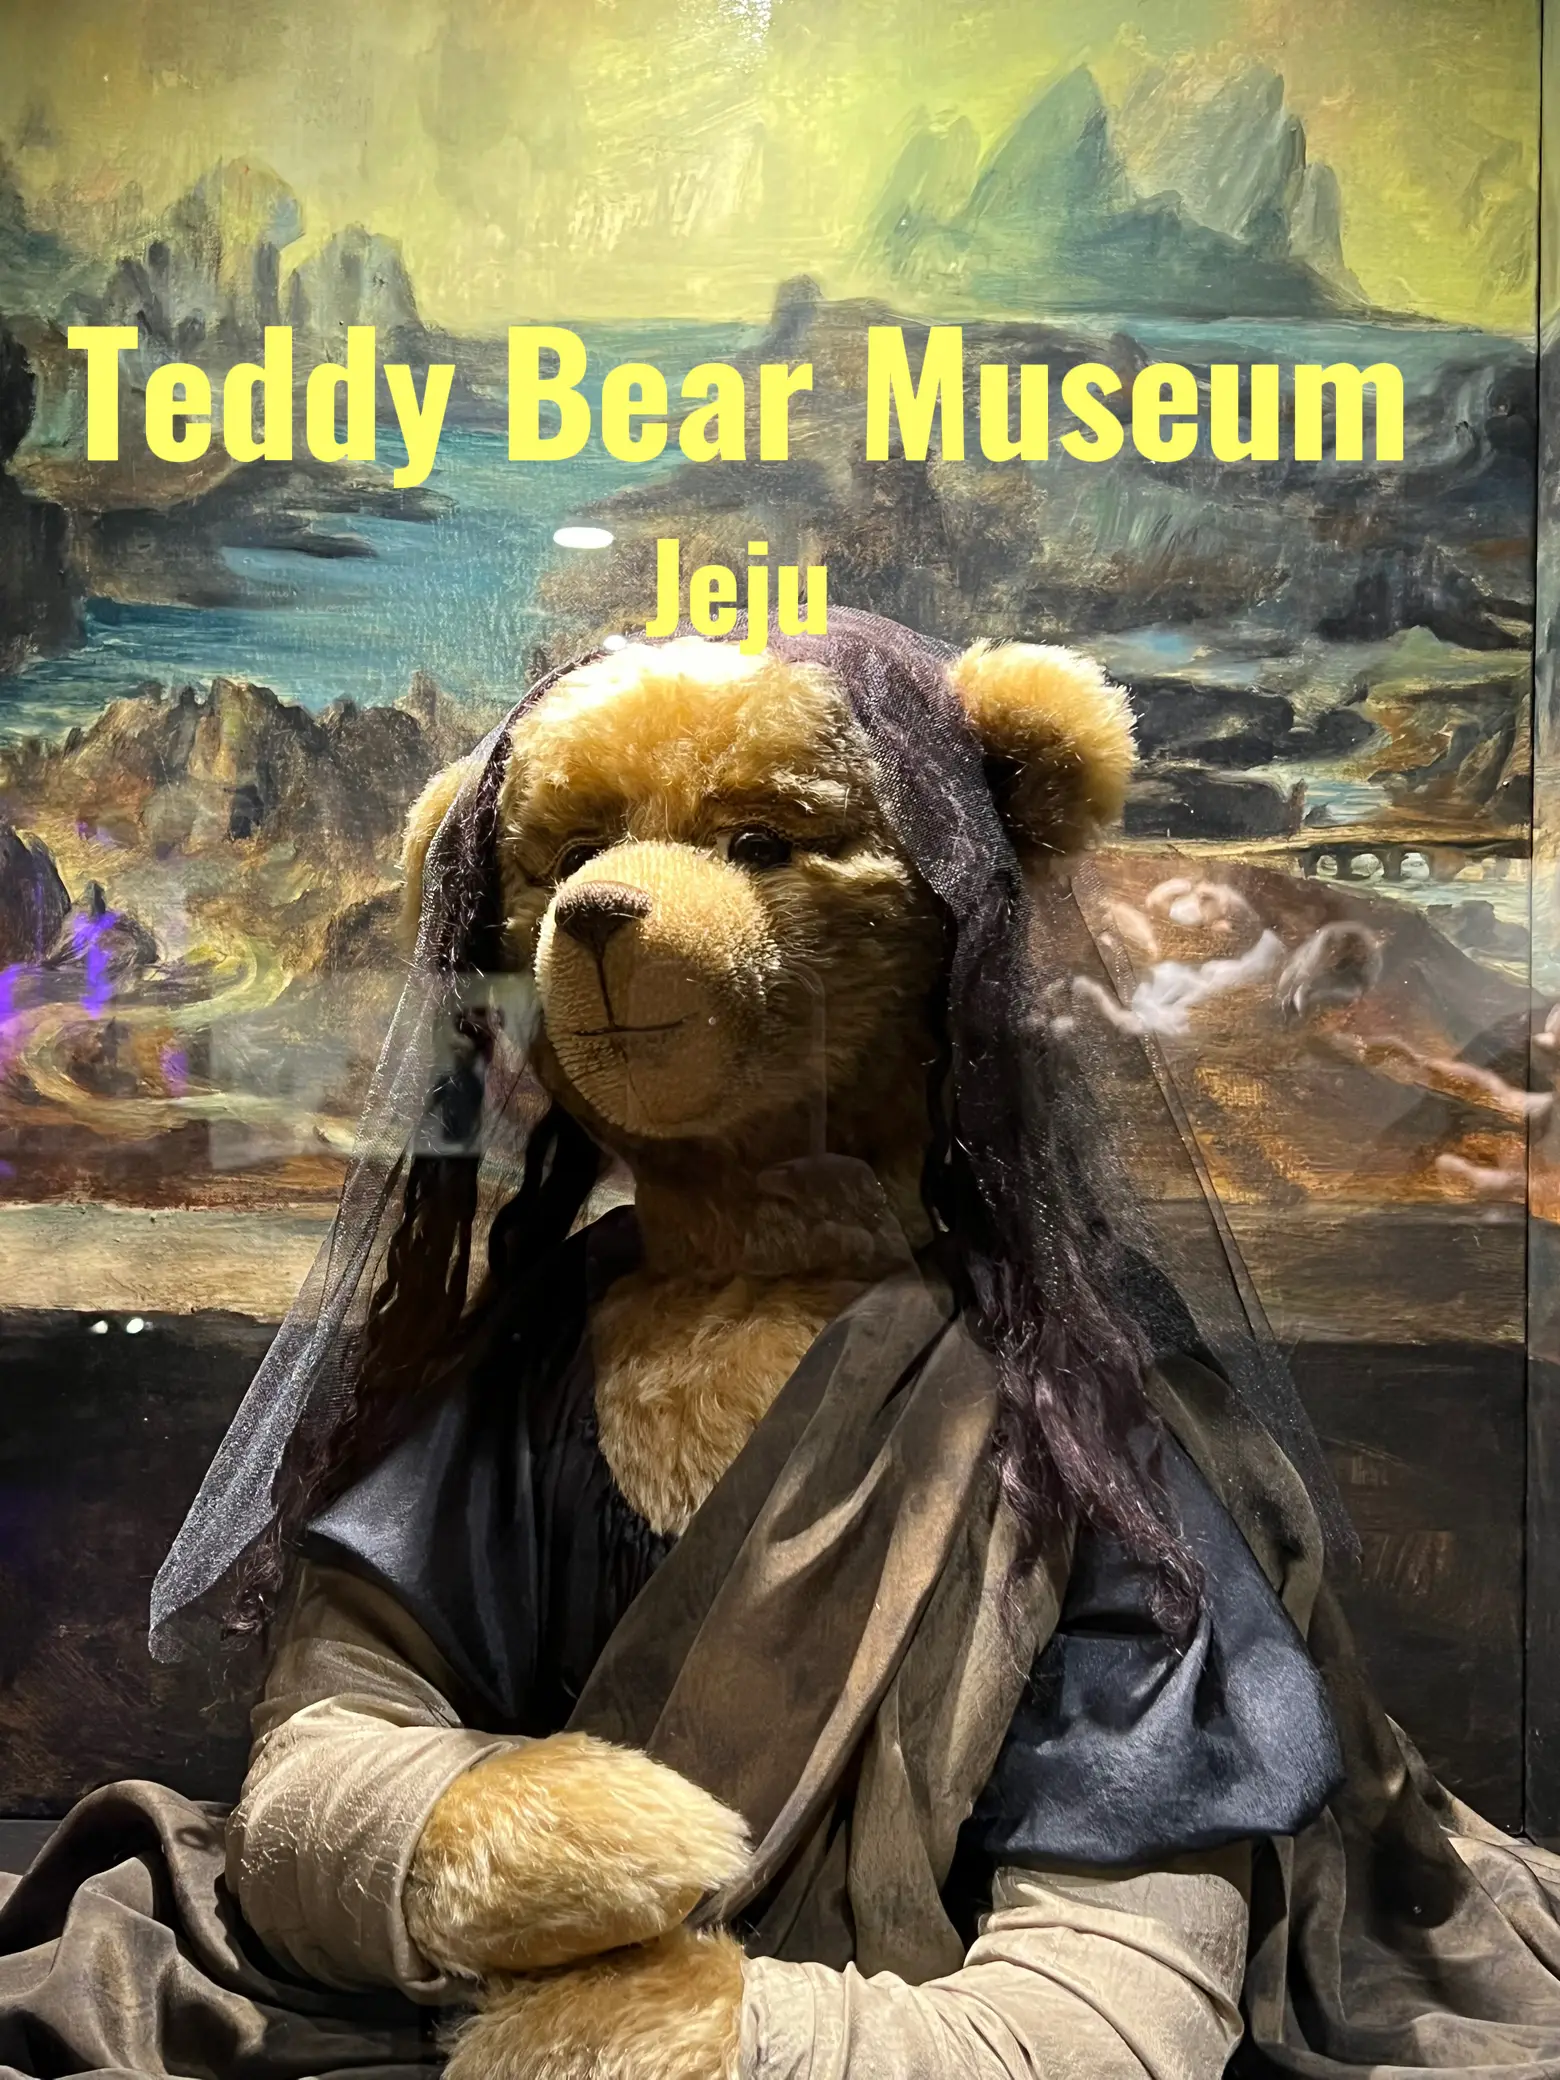 Teddy Bear Museum - Jeju island